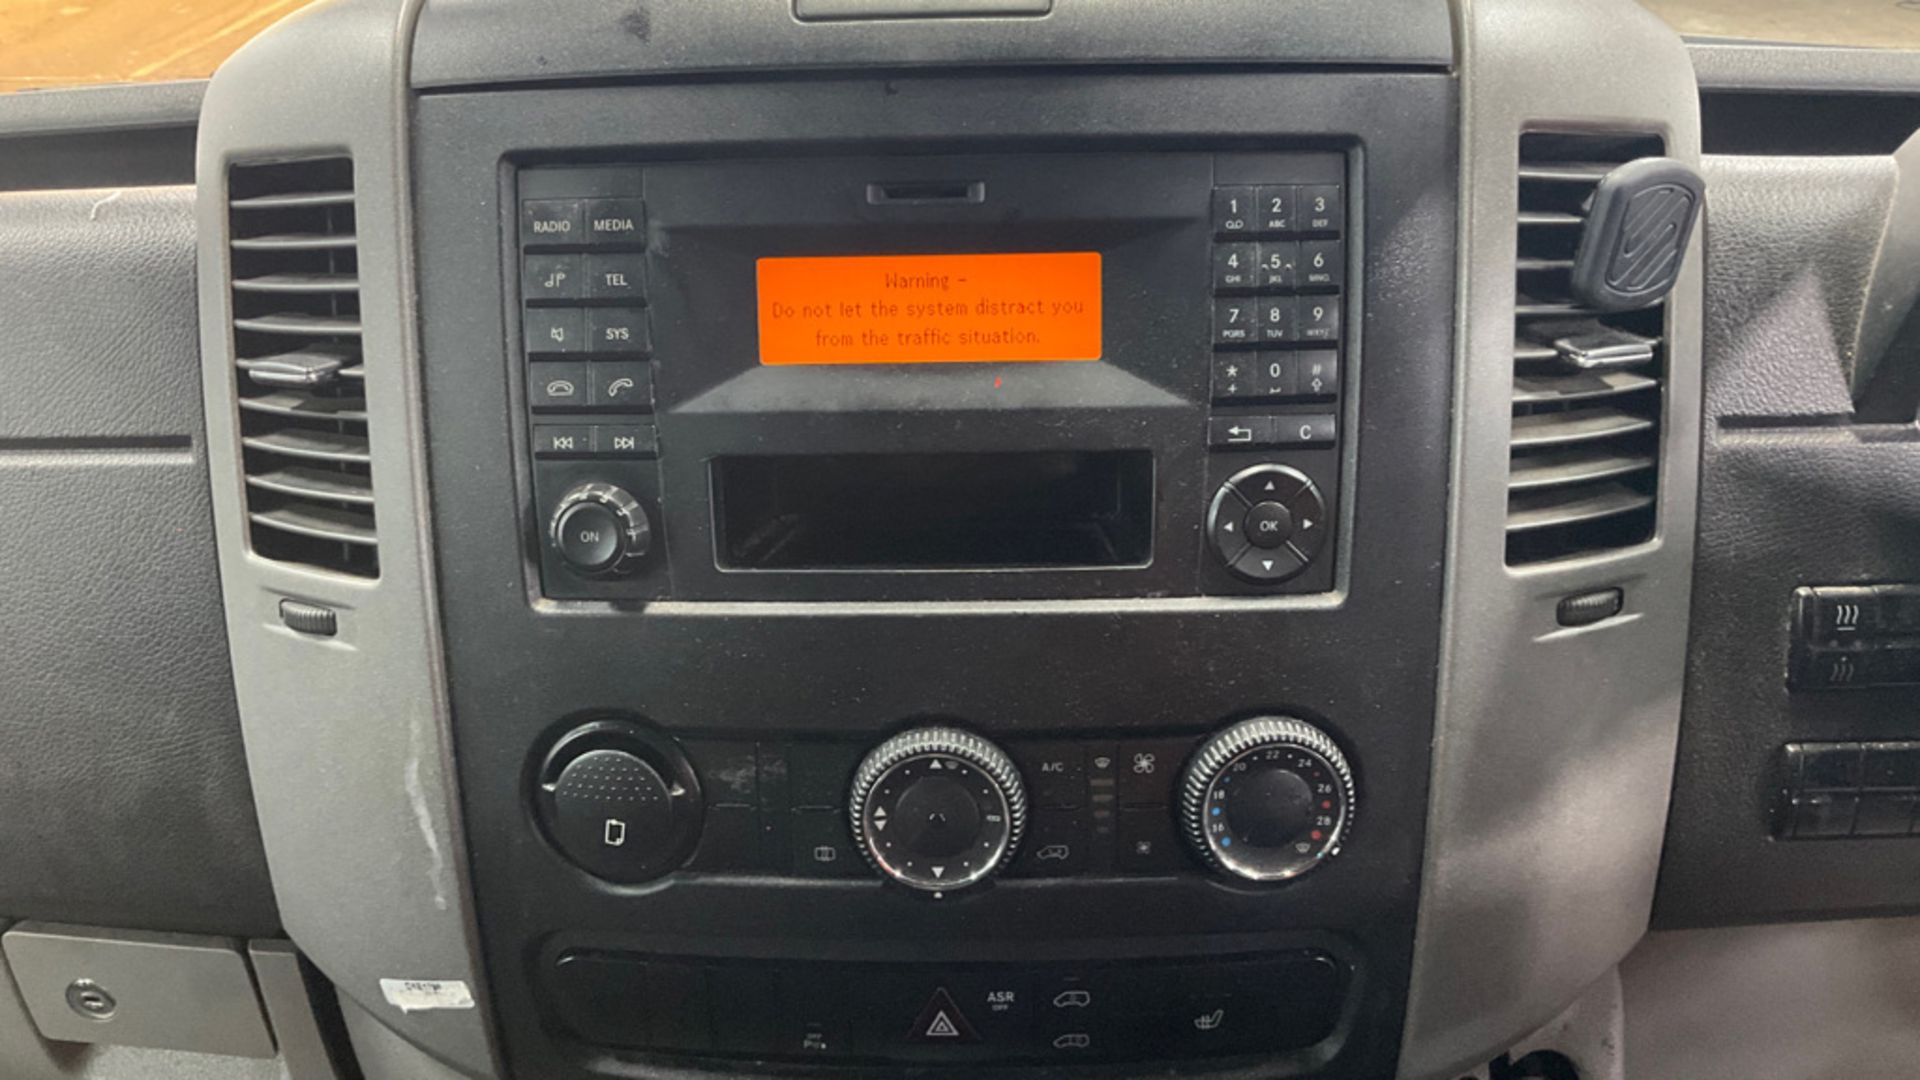 Mercedes-Benz Sprinter 314 2.1 CDI 3.5T L3H3-2018 '68 Reg'-ULEZ Compliant -Bluetooth Audio -No Vat - Image 8 of 9